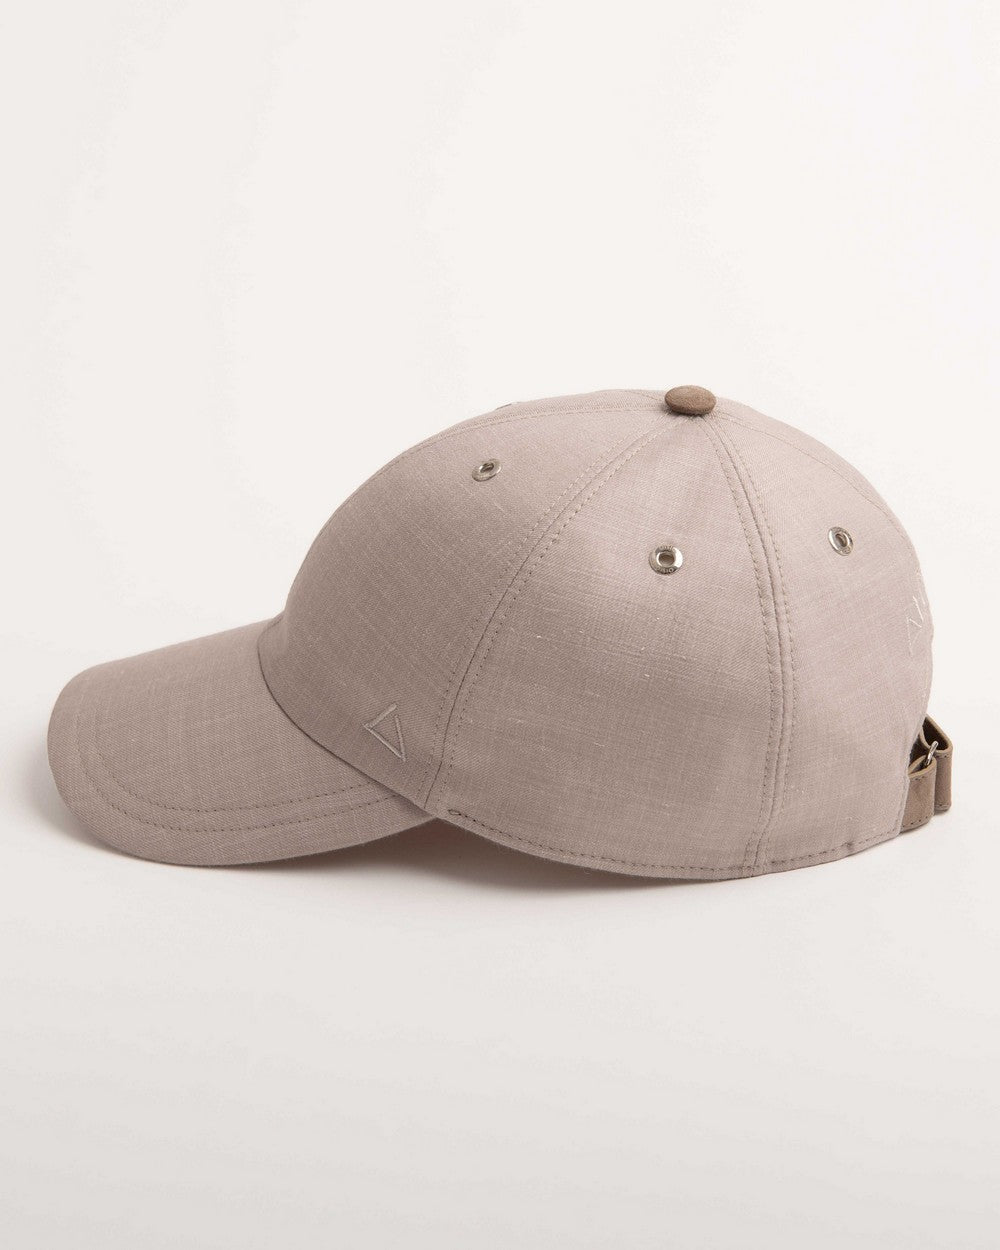 Zeno Baseball Hat in Silk/Cashmere/Linen, Sand